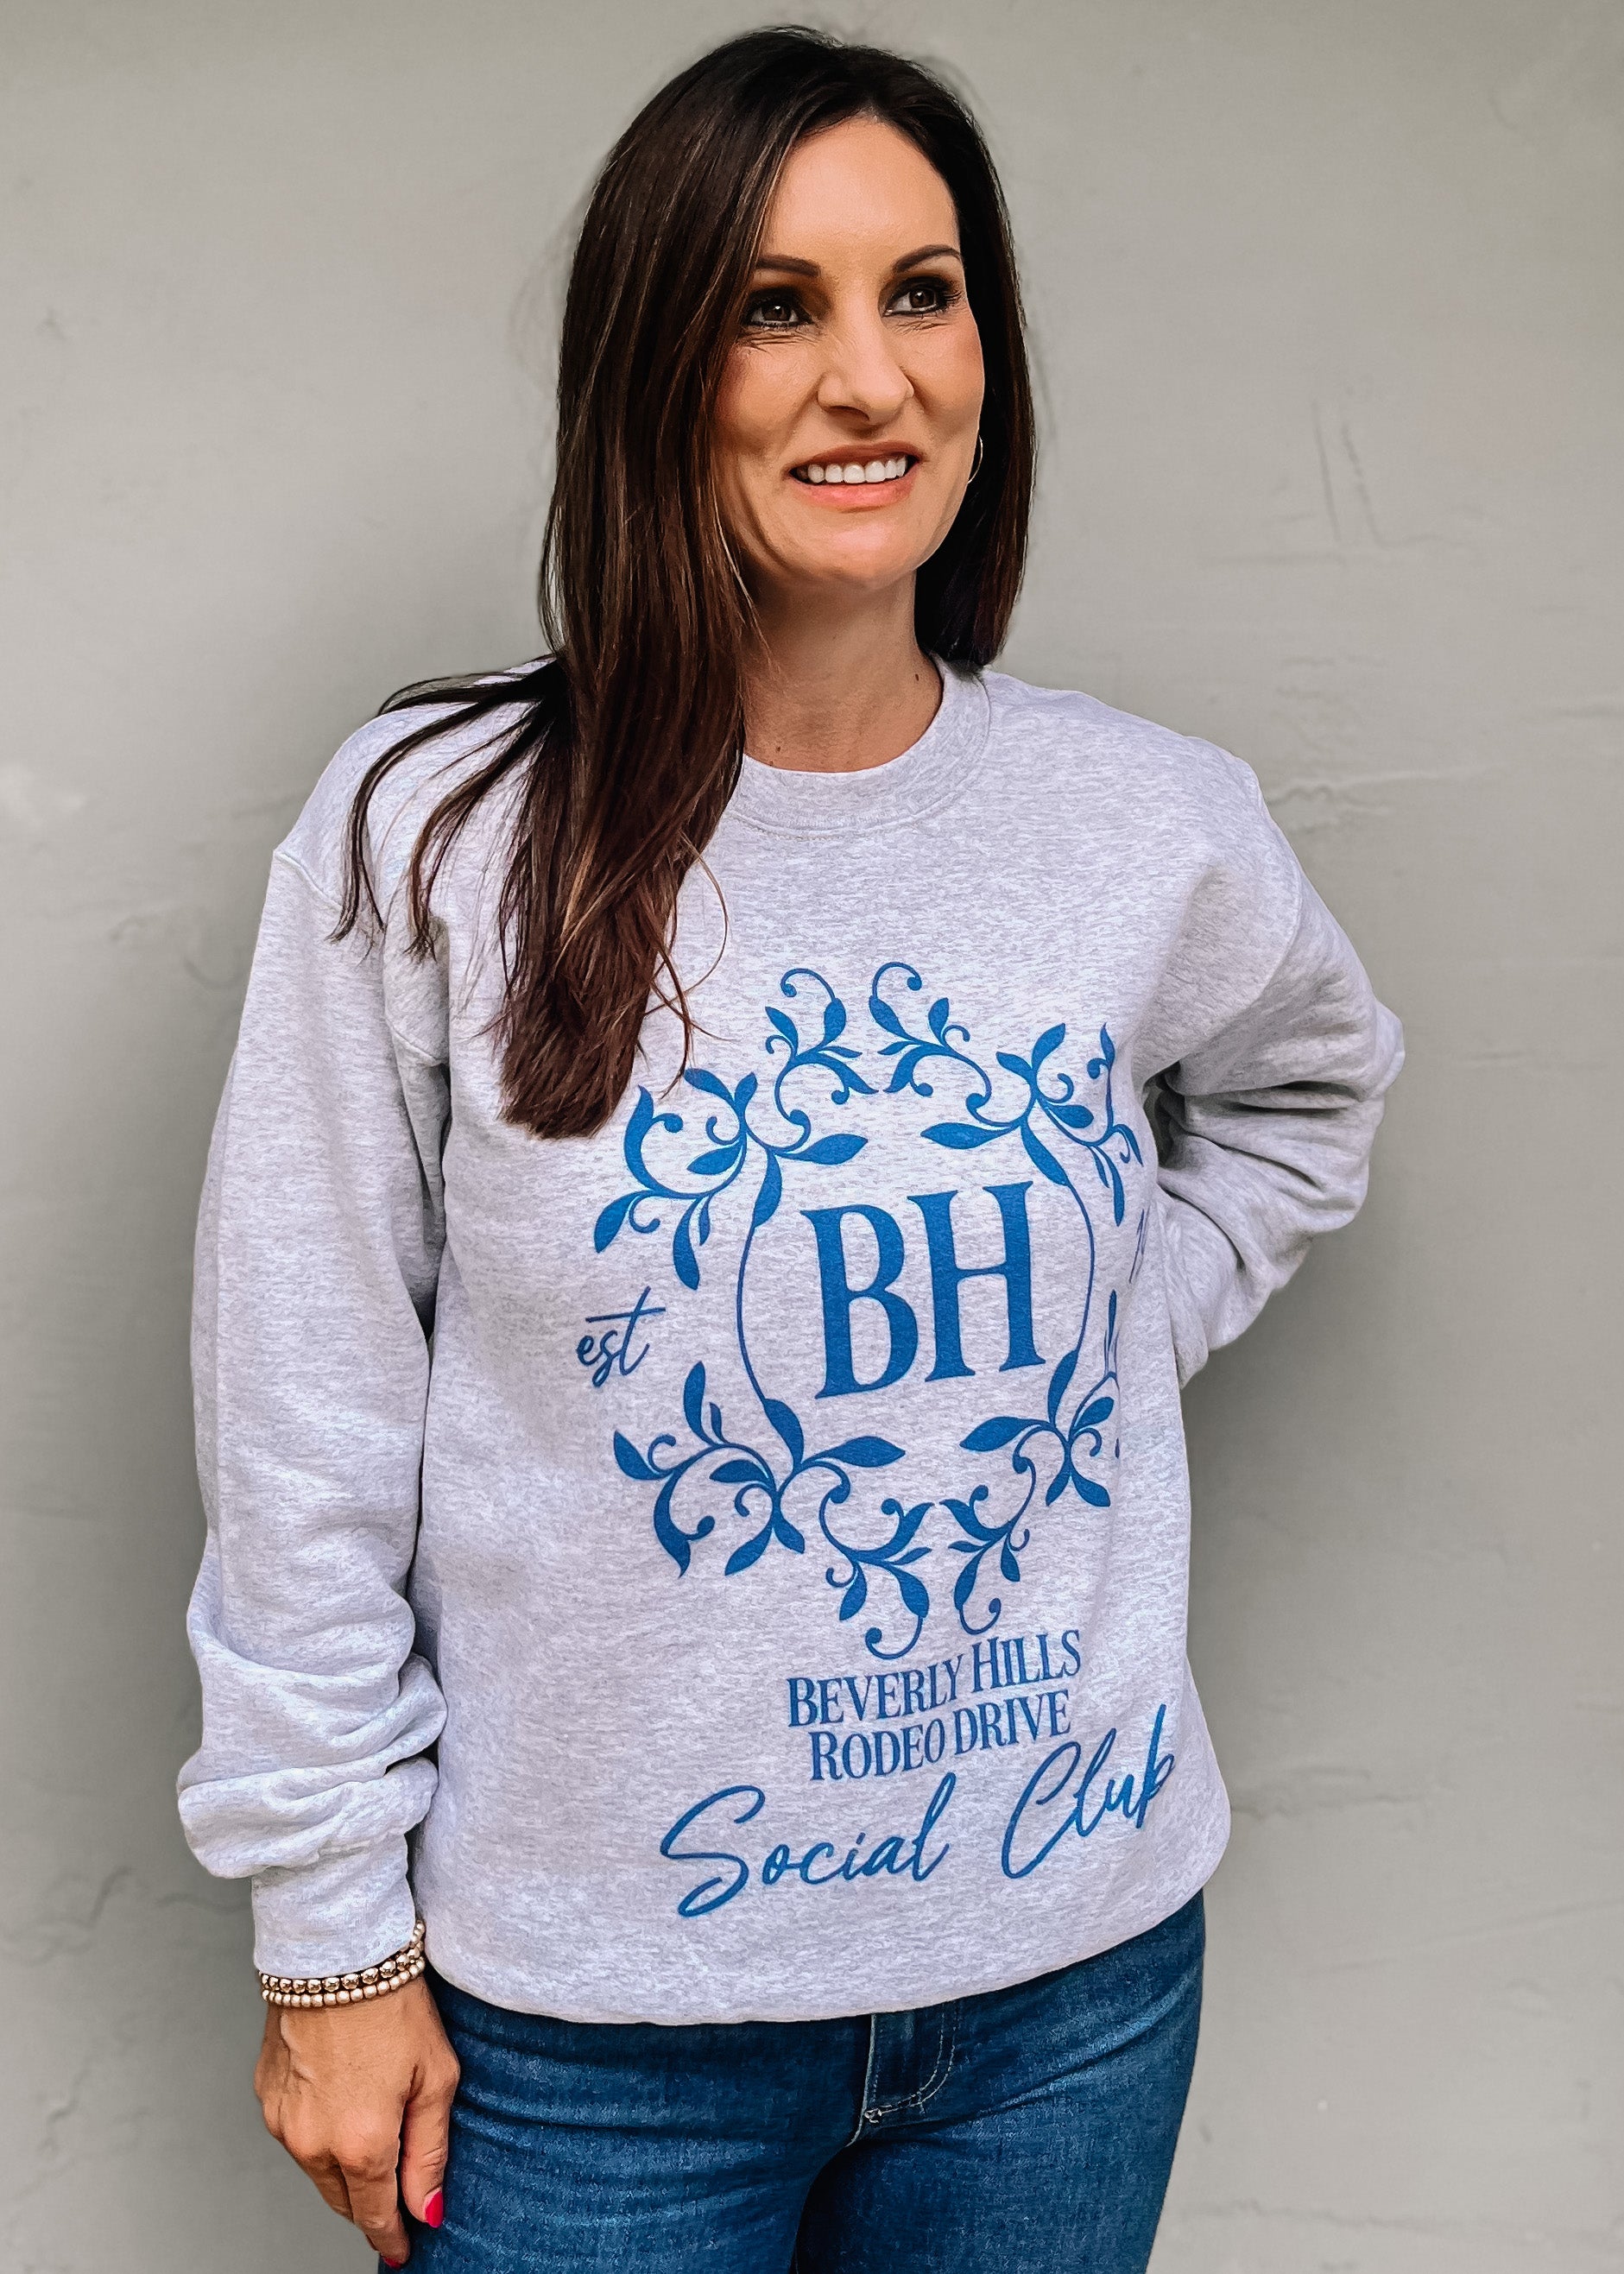 Beverly Hills Rodeo Drive Social Club Sweatshirt